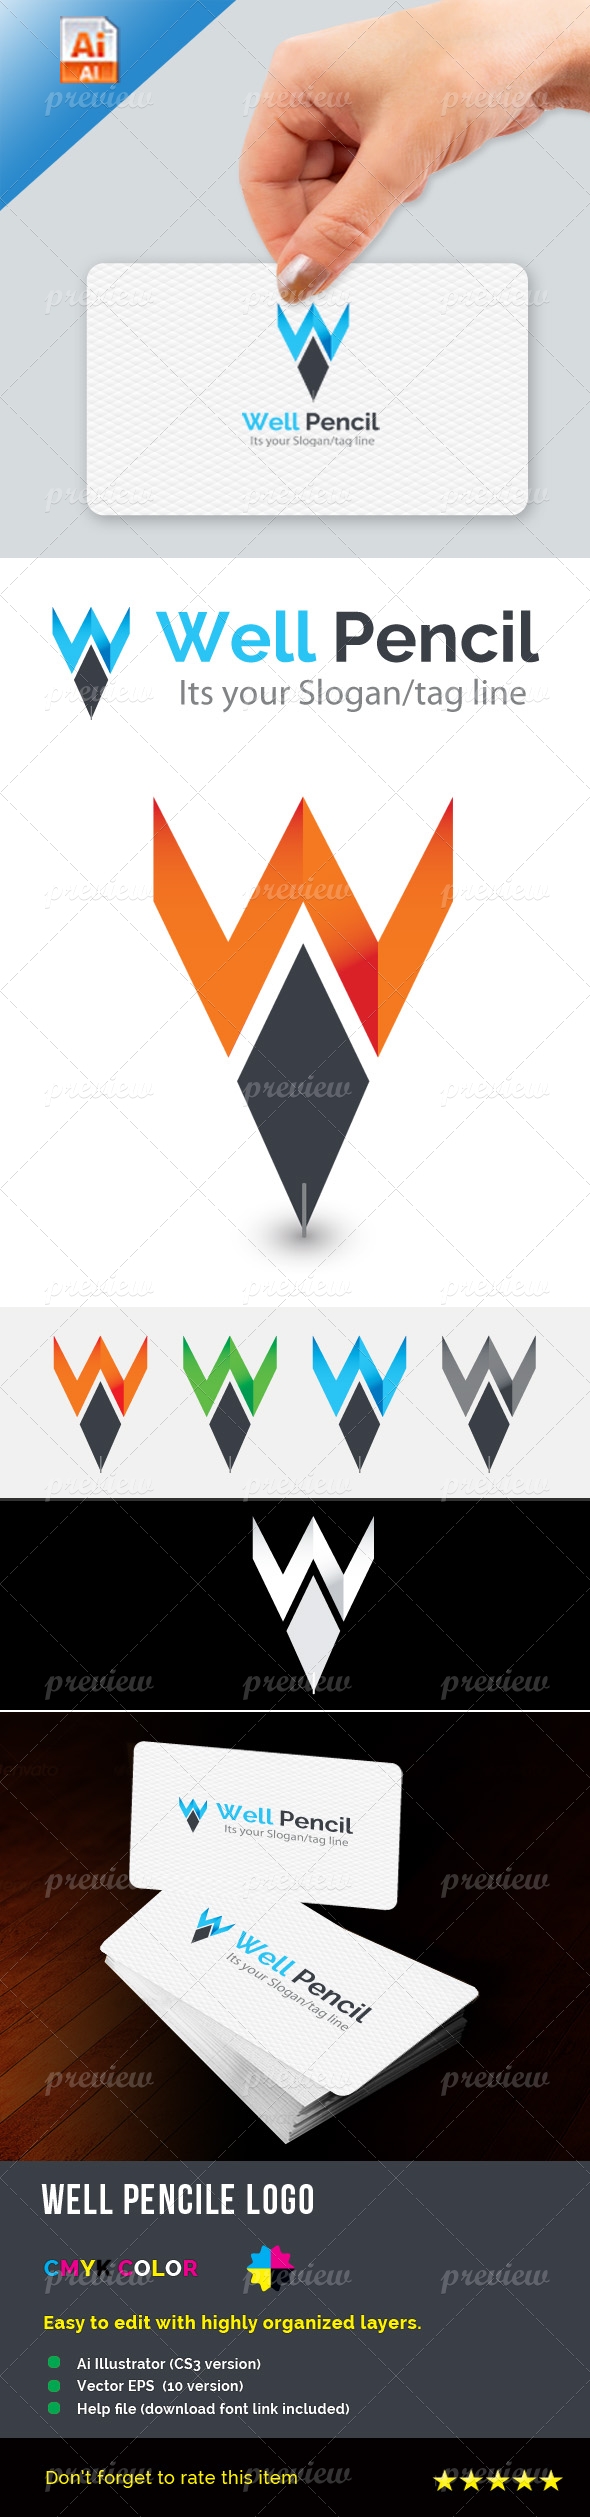 Well Pencil Logo